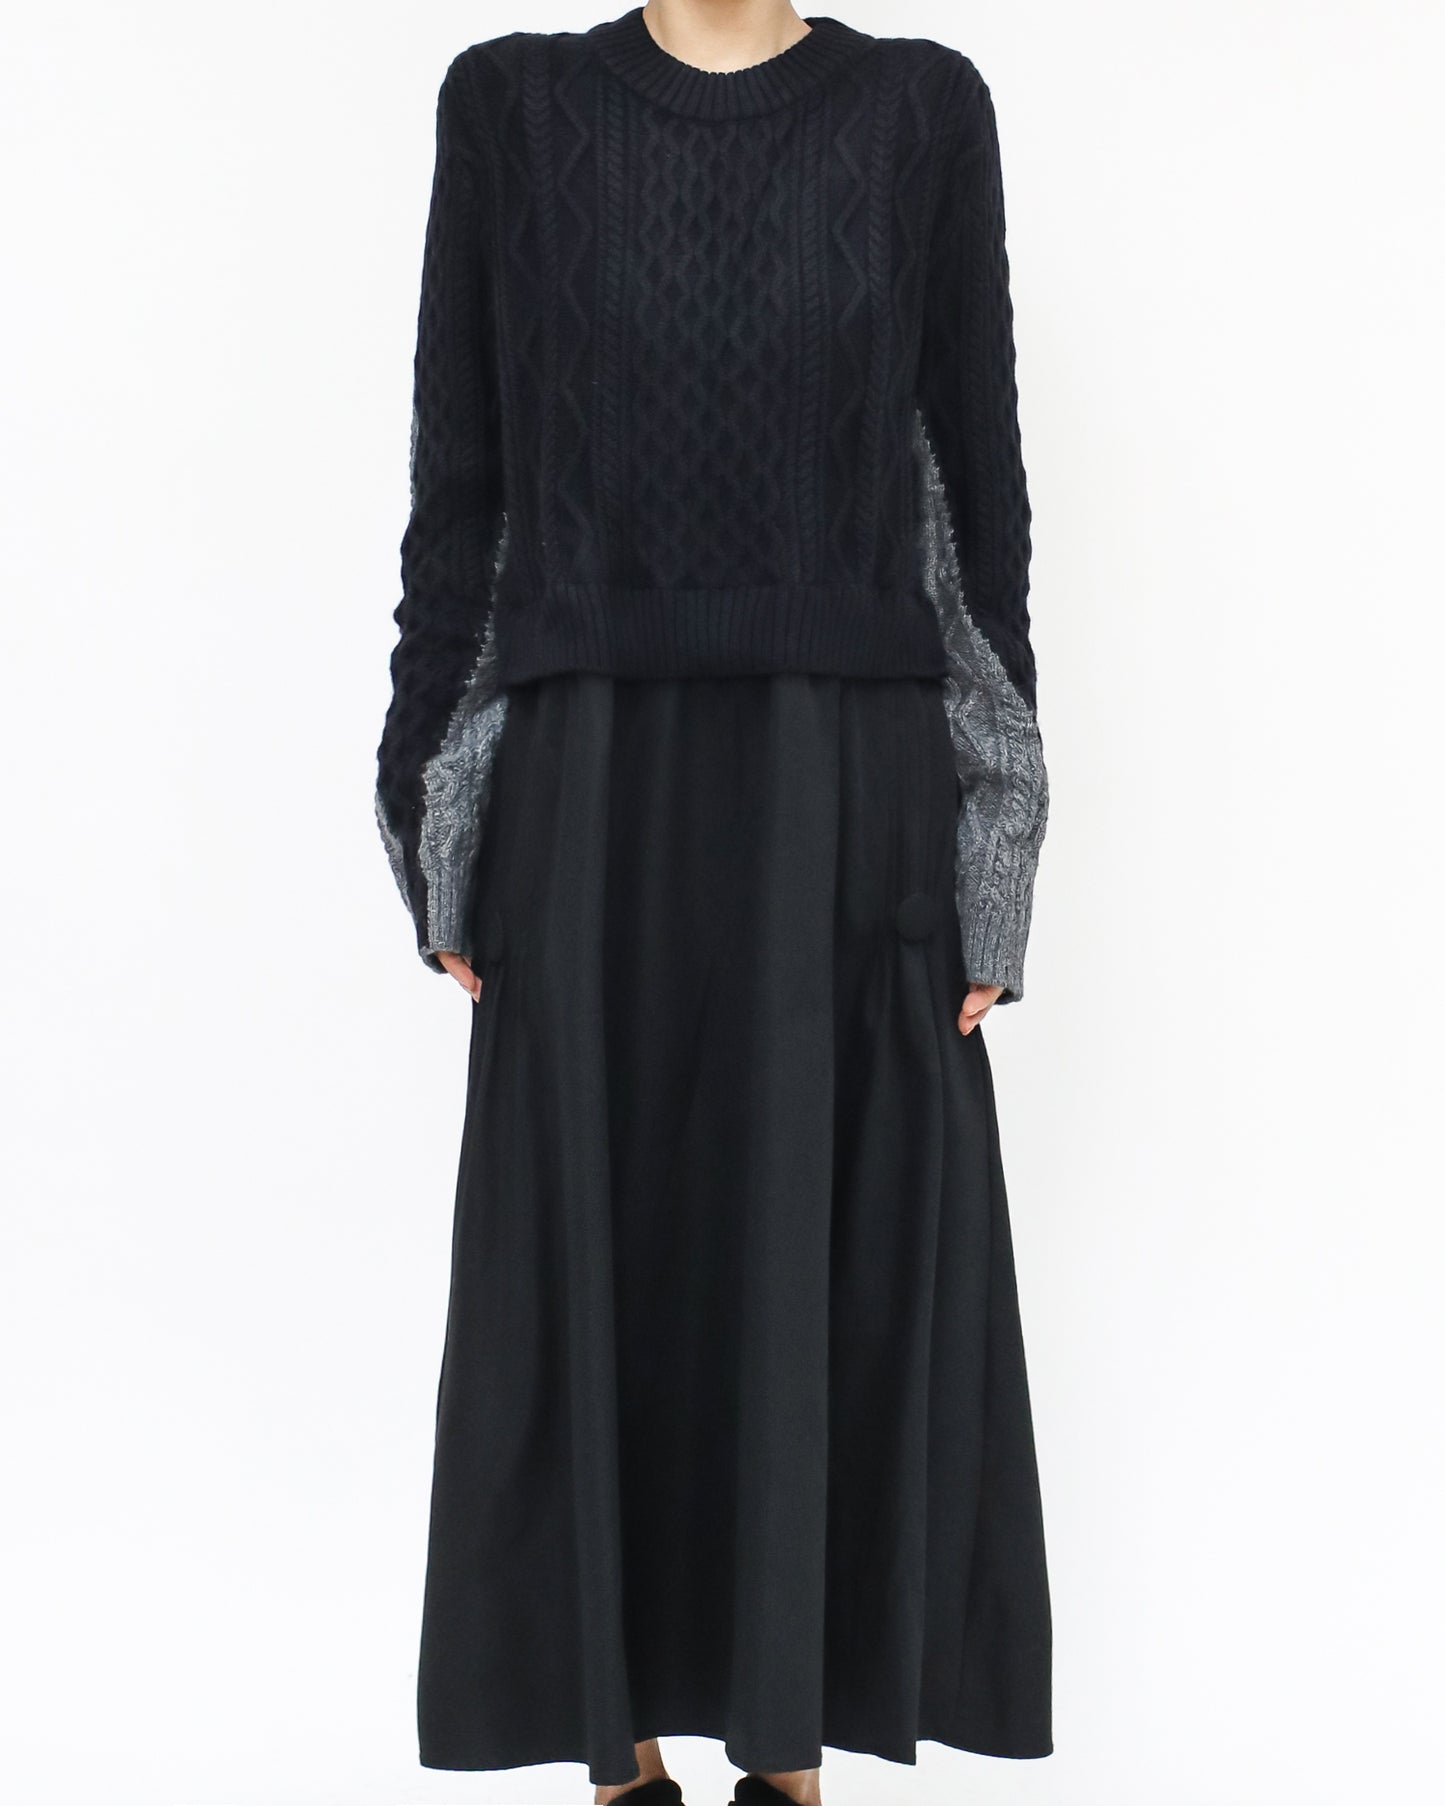 black & grey knitted w/ shirt flare dress